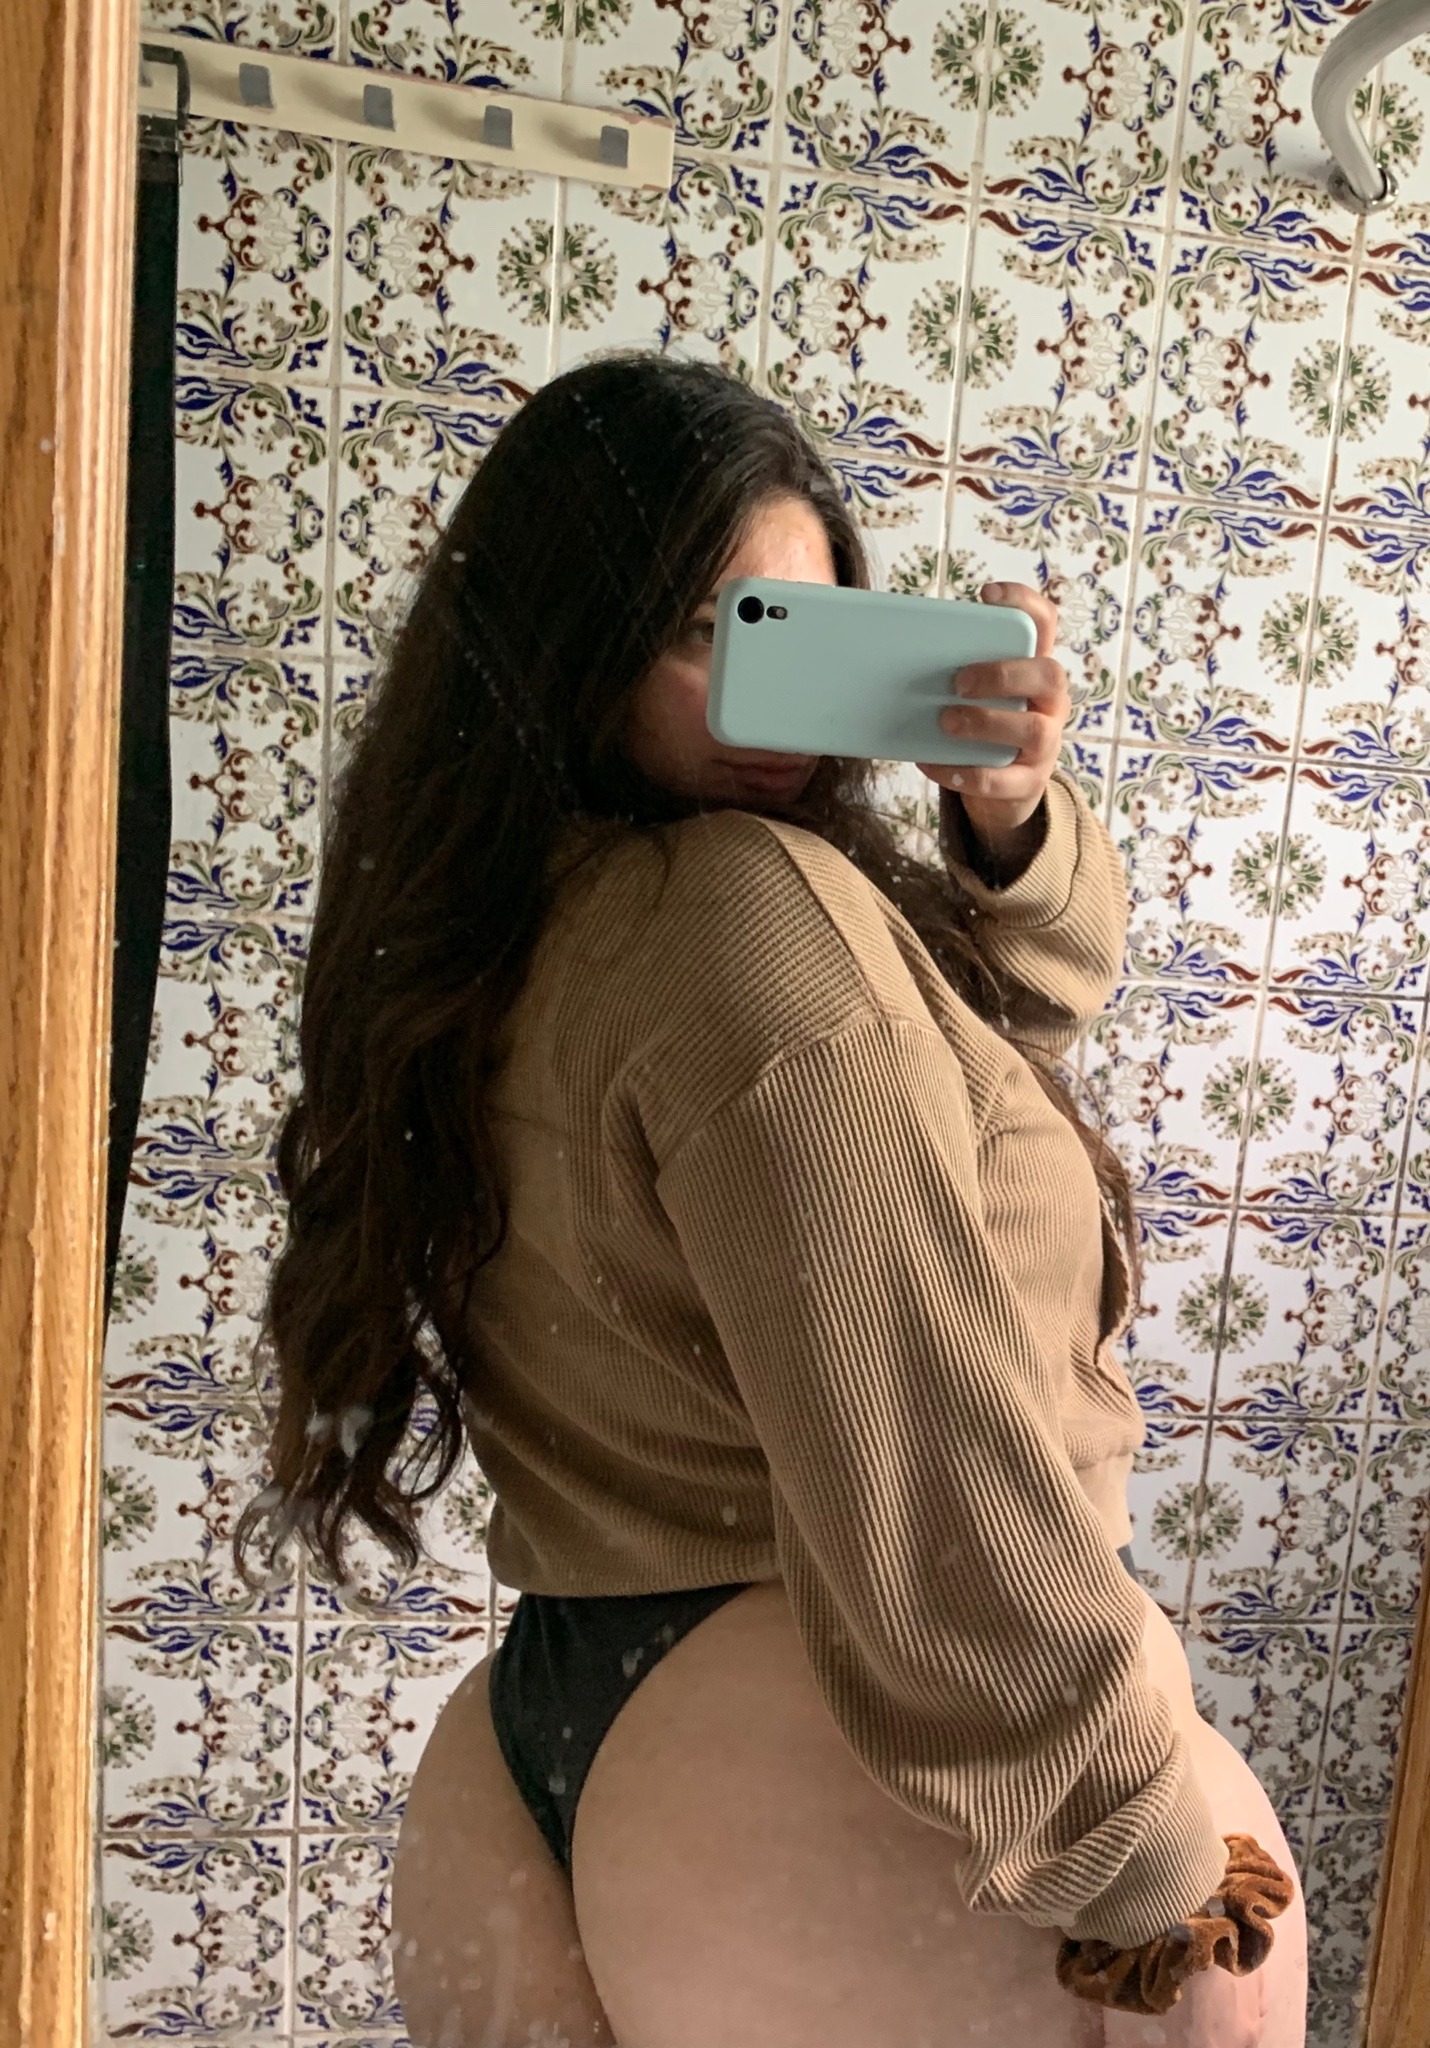 The best latina ass